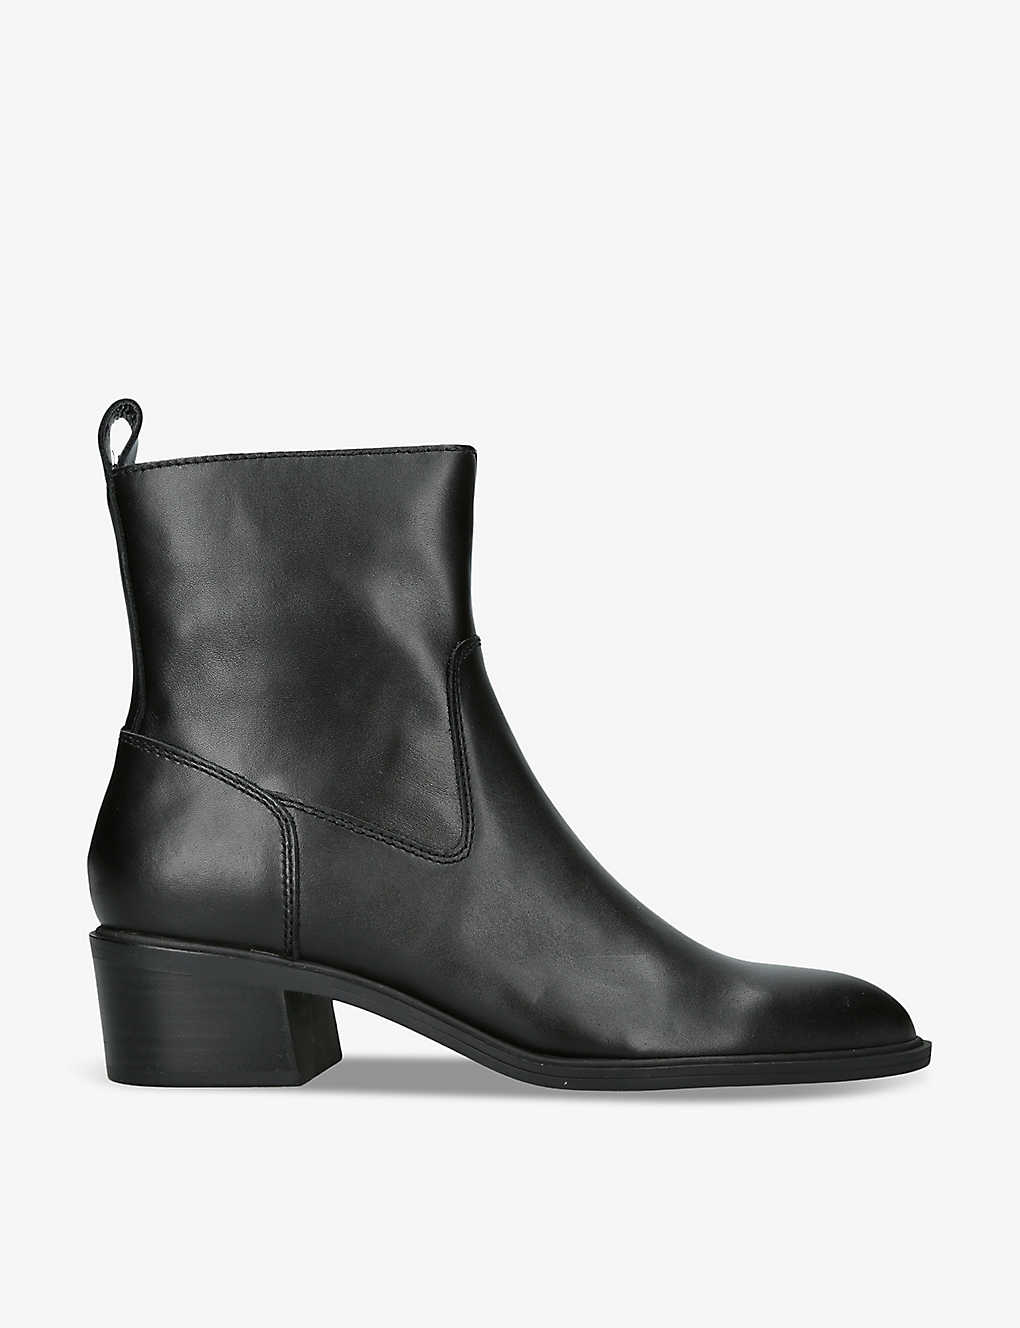 Shop Dolce Vita Women's Black Bili H2o Leather Ankle Boots